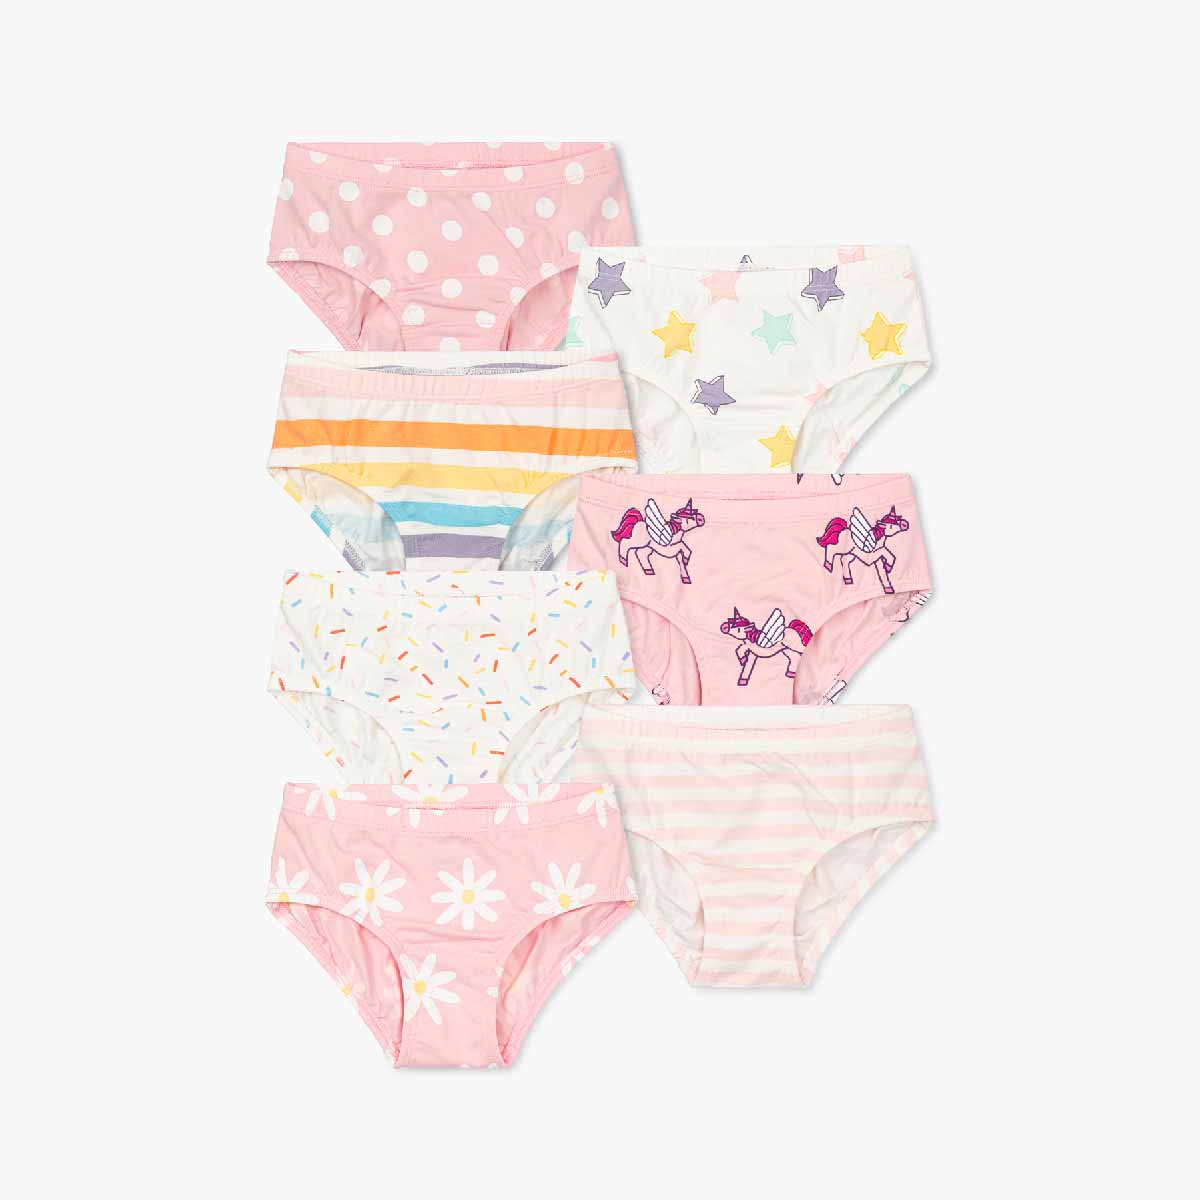 https://cdn.shopify.com/s/files/1/2338/2917/files/underwear_girls-pink.jpg?v=1700234945